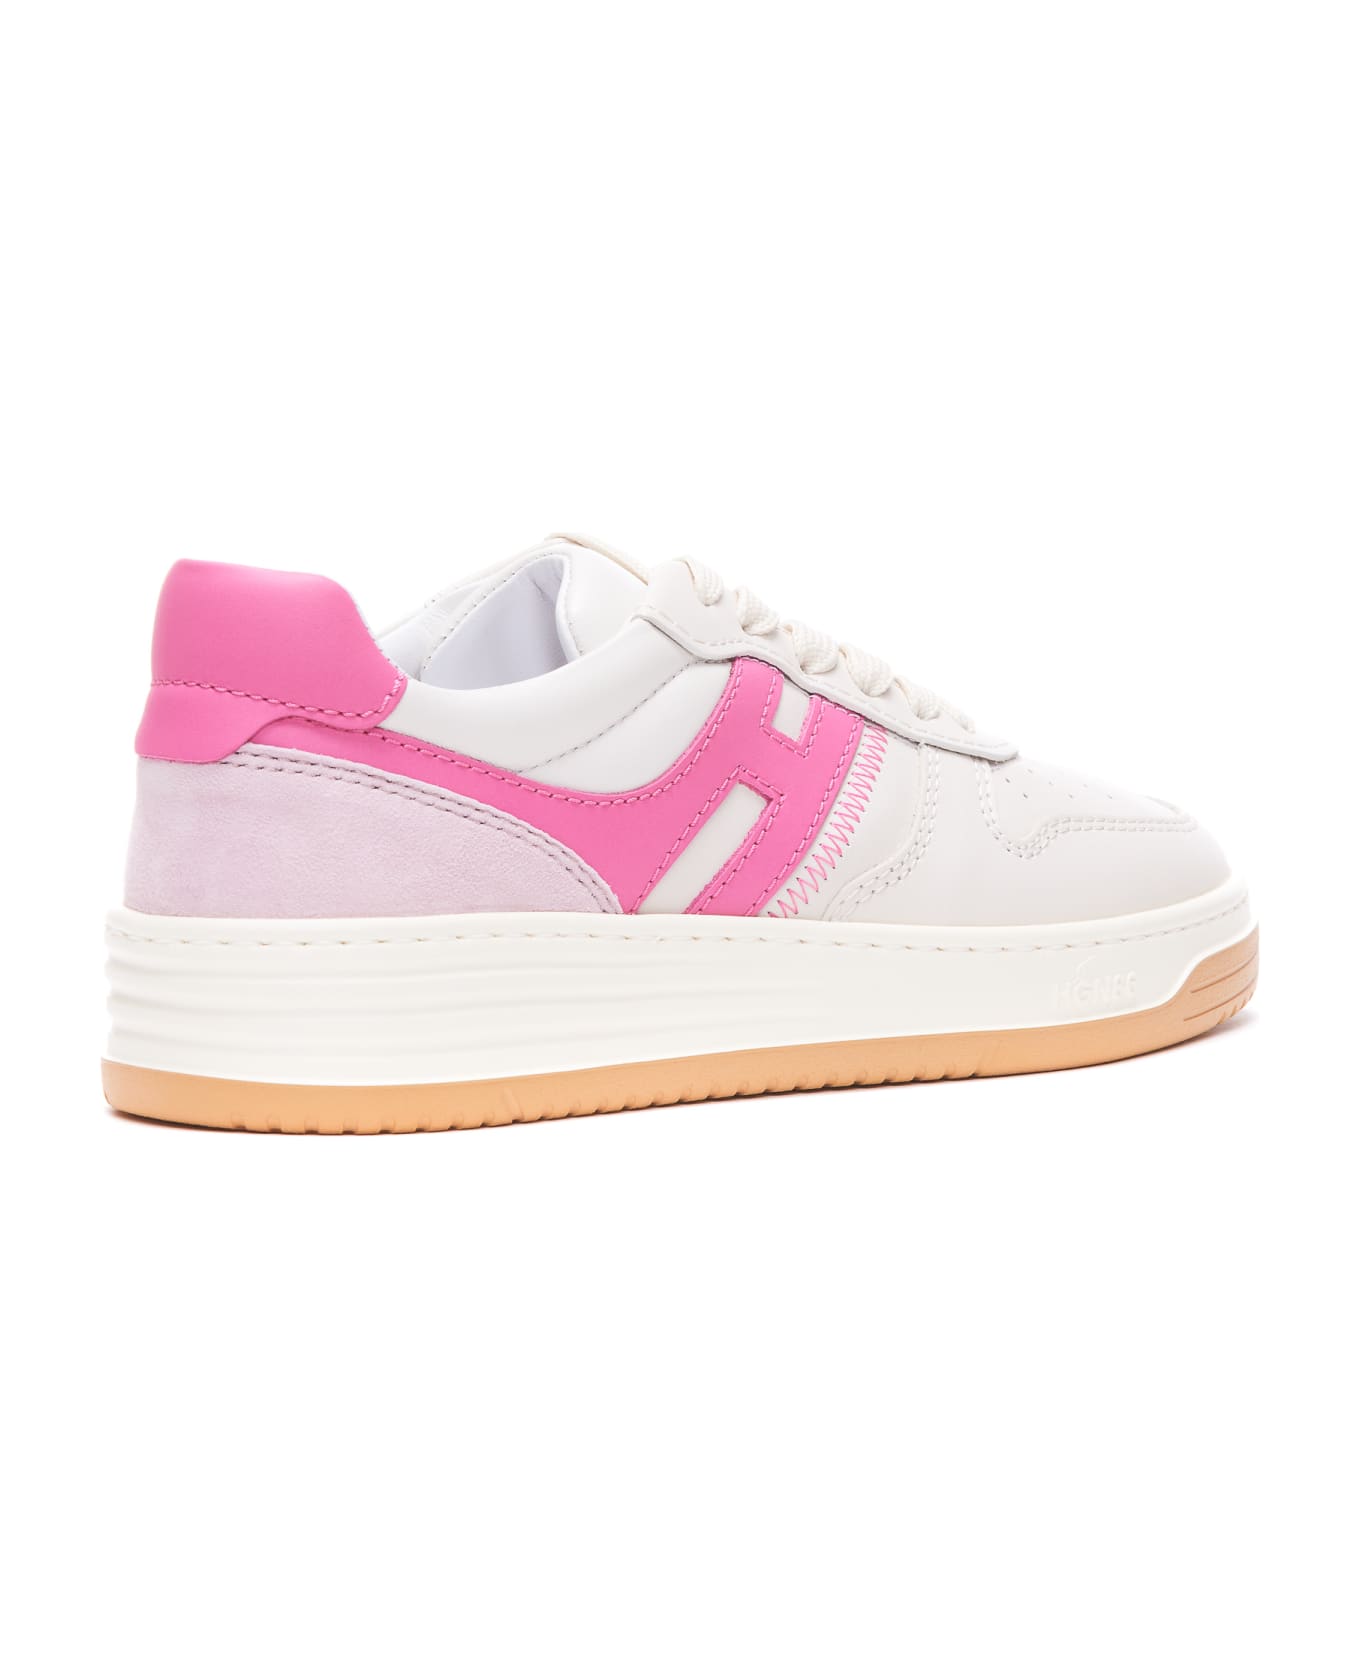 Hogan H630 Sneakers - White, pink